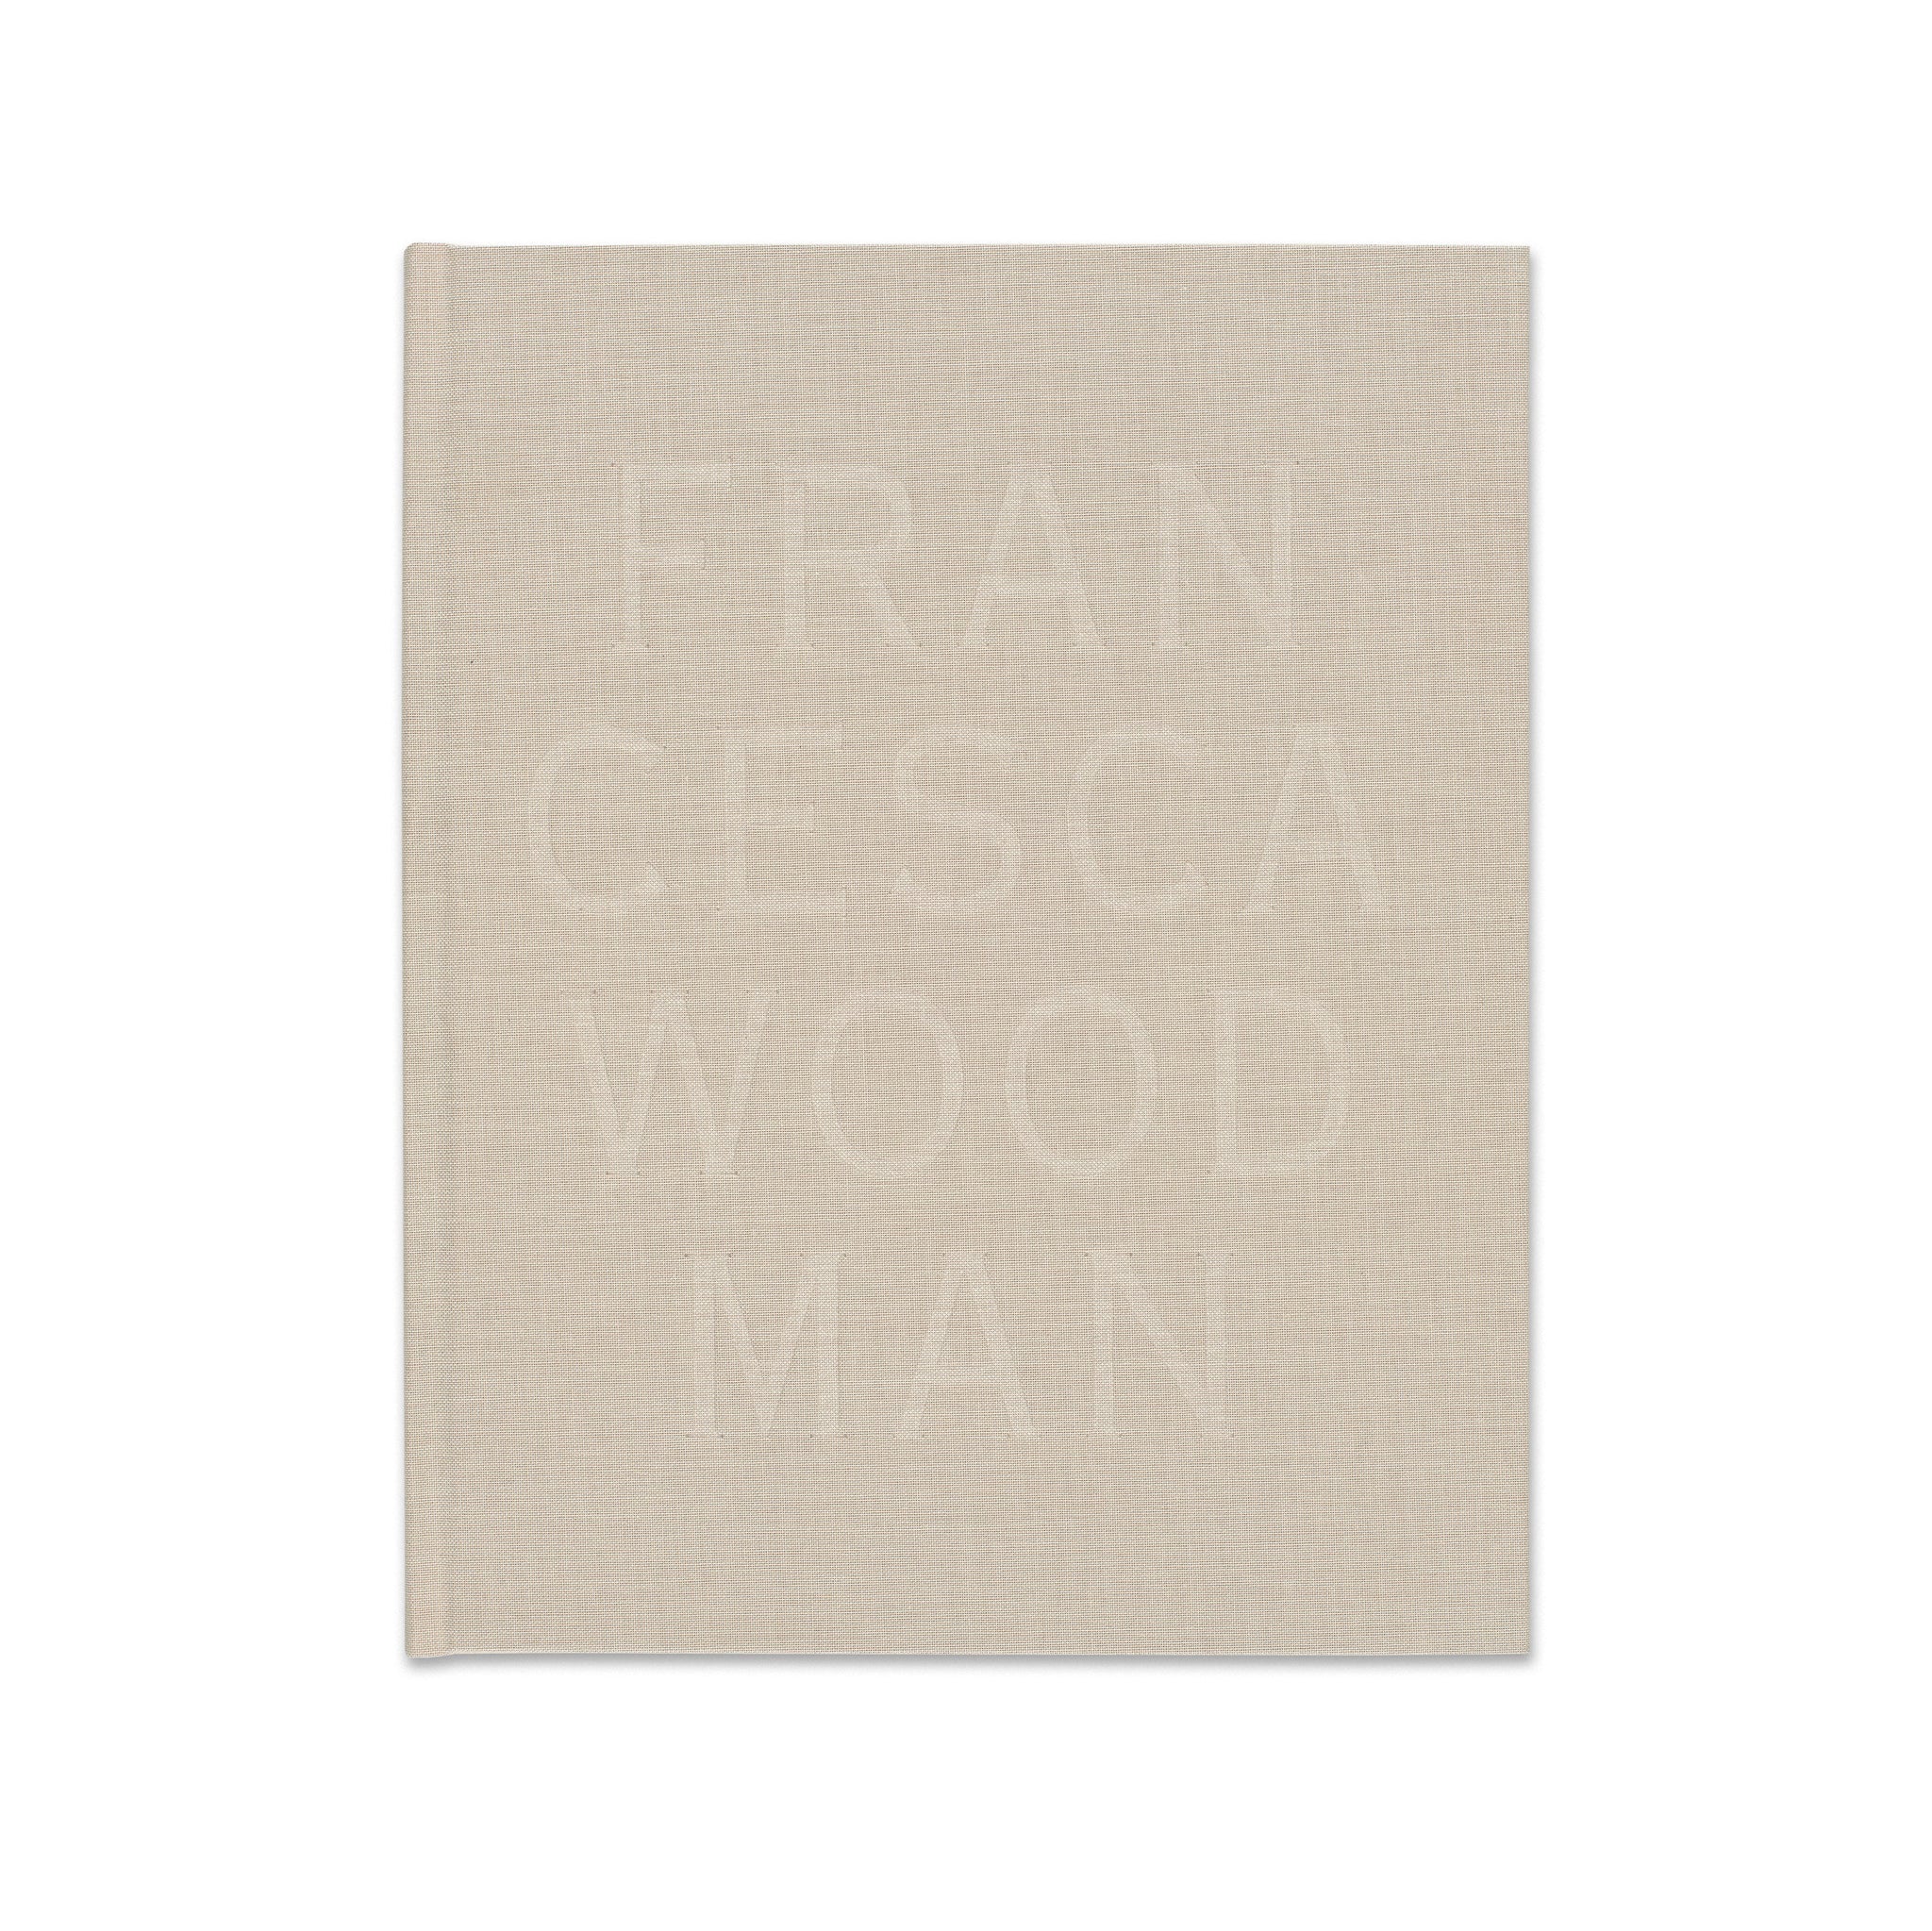 Cover of Francesca Woodman book